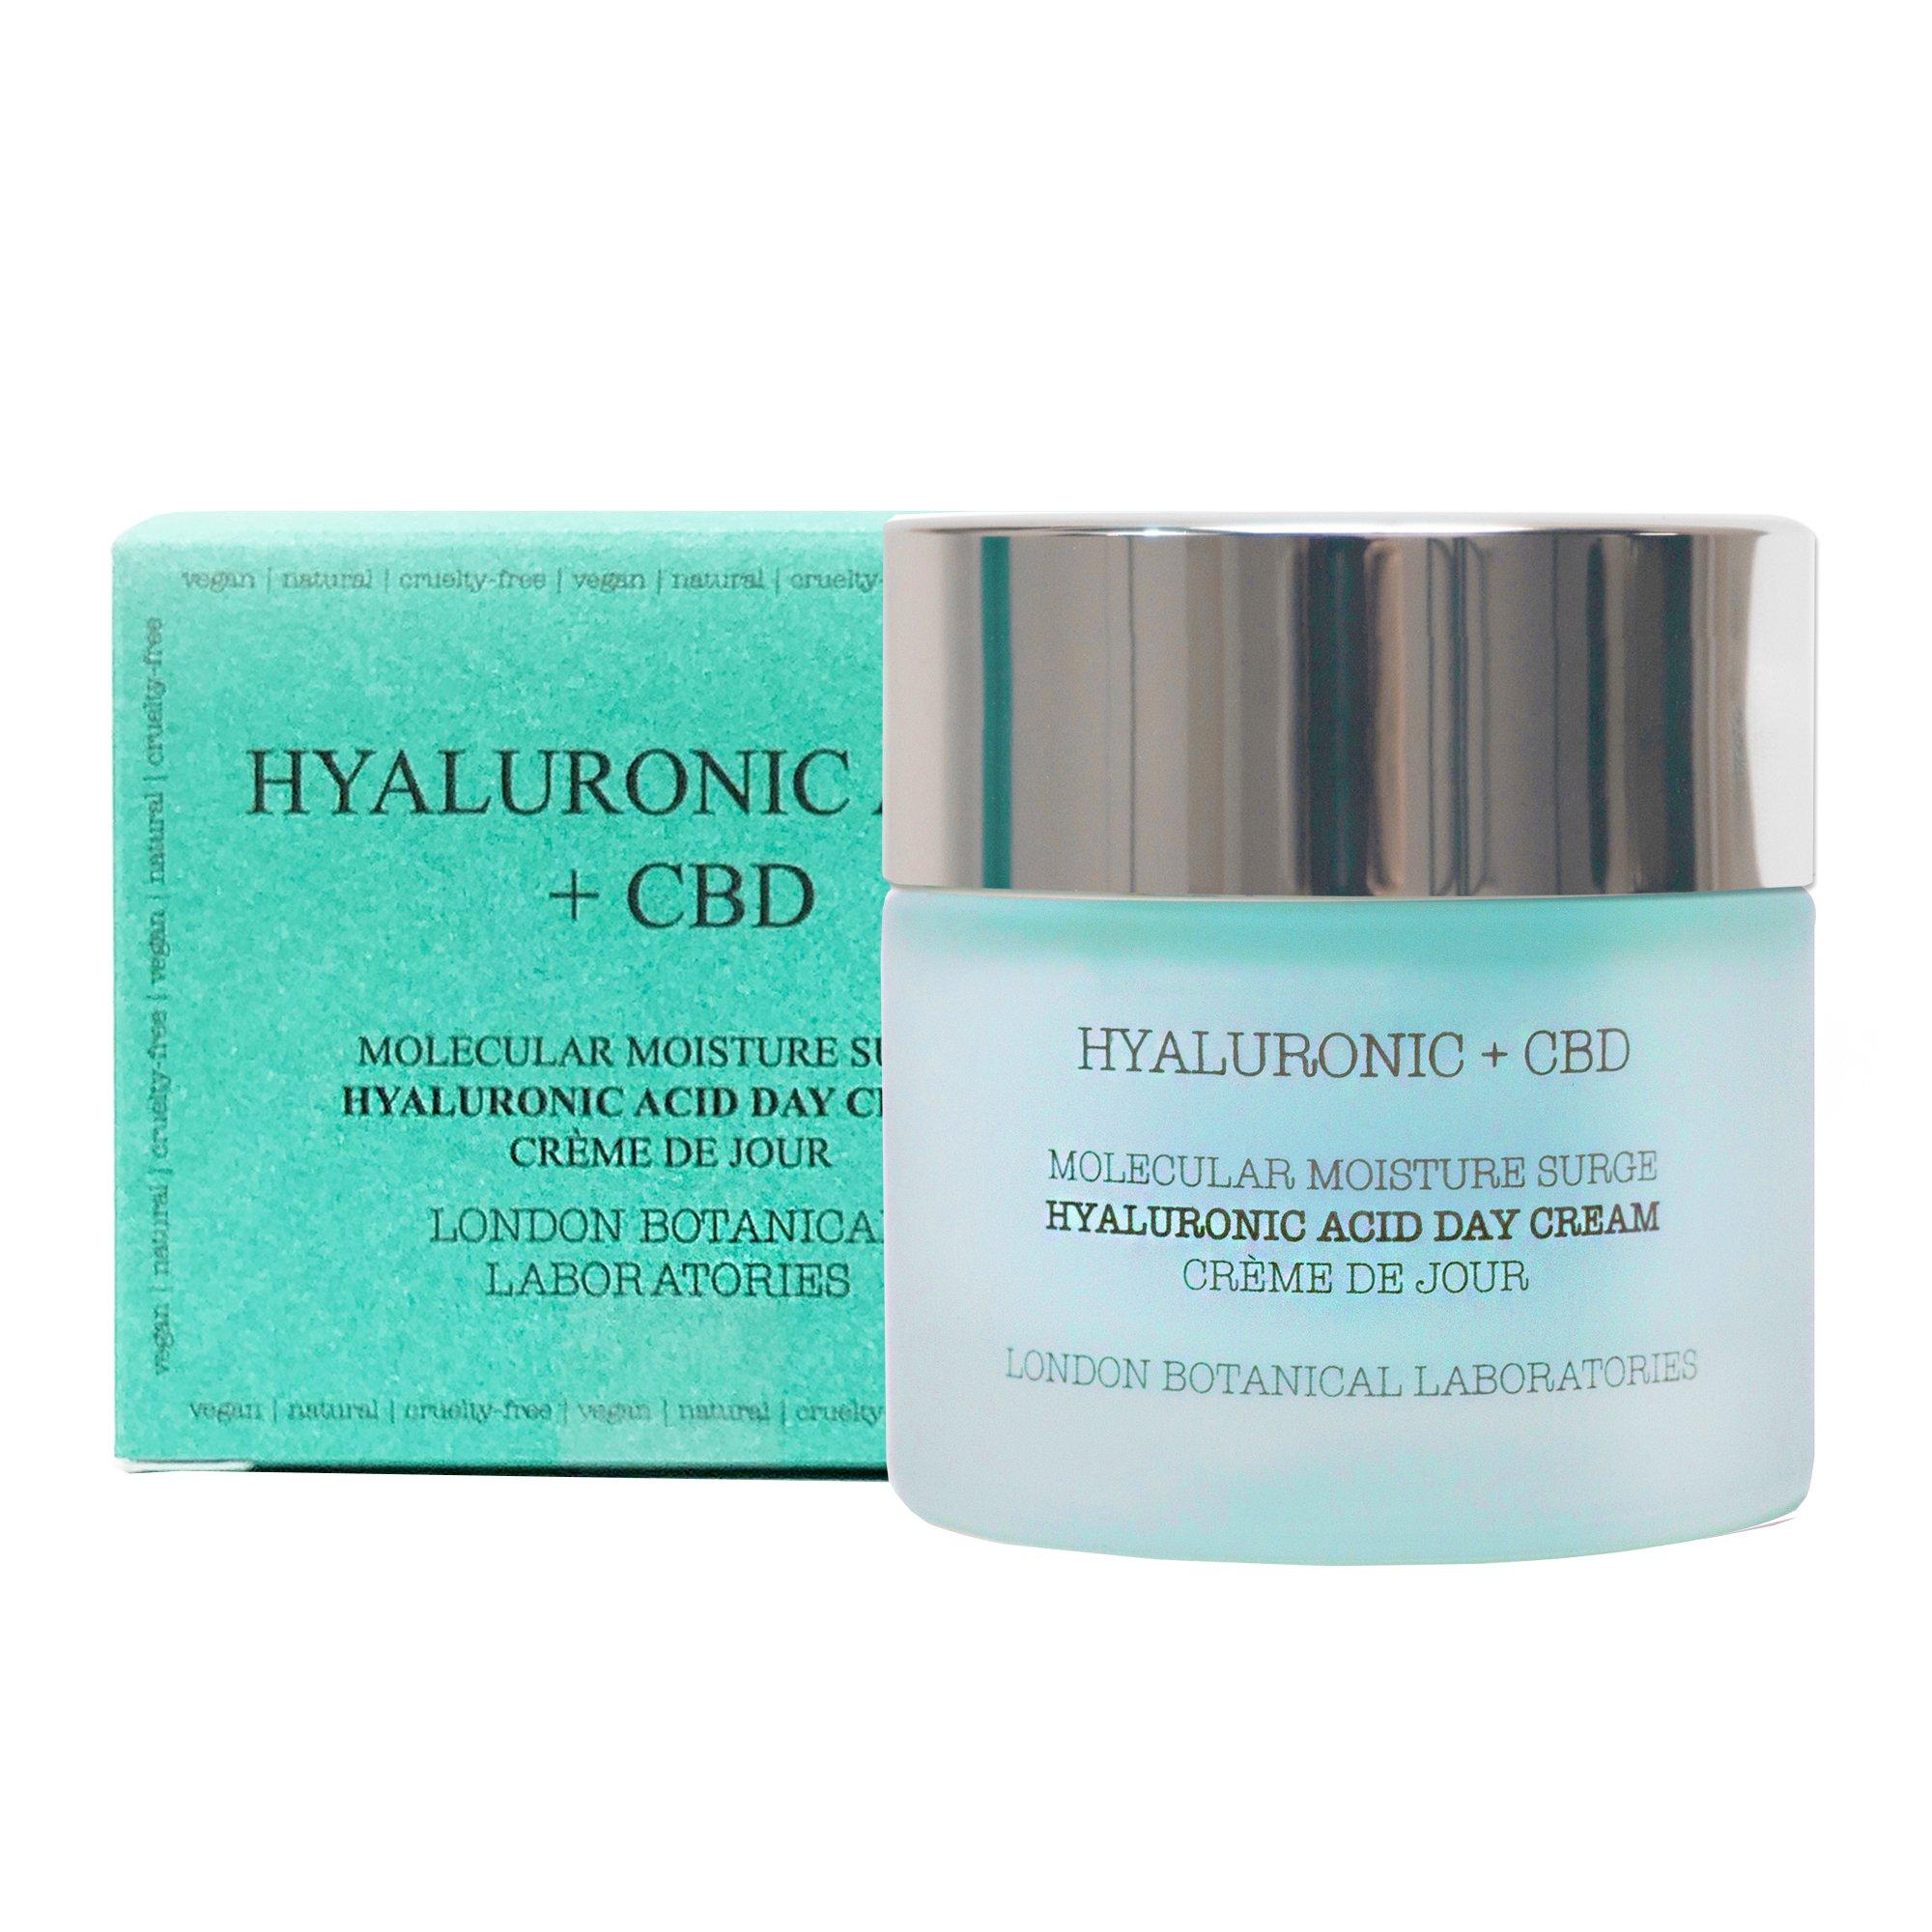 Hyaluronic Acid + CBD - Molecular Moisture Surge Hyaluronic Acid Day Cream 50ml